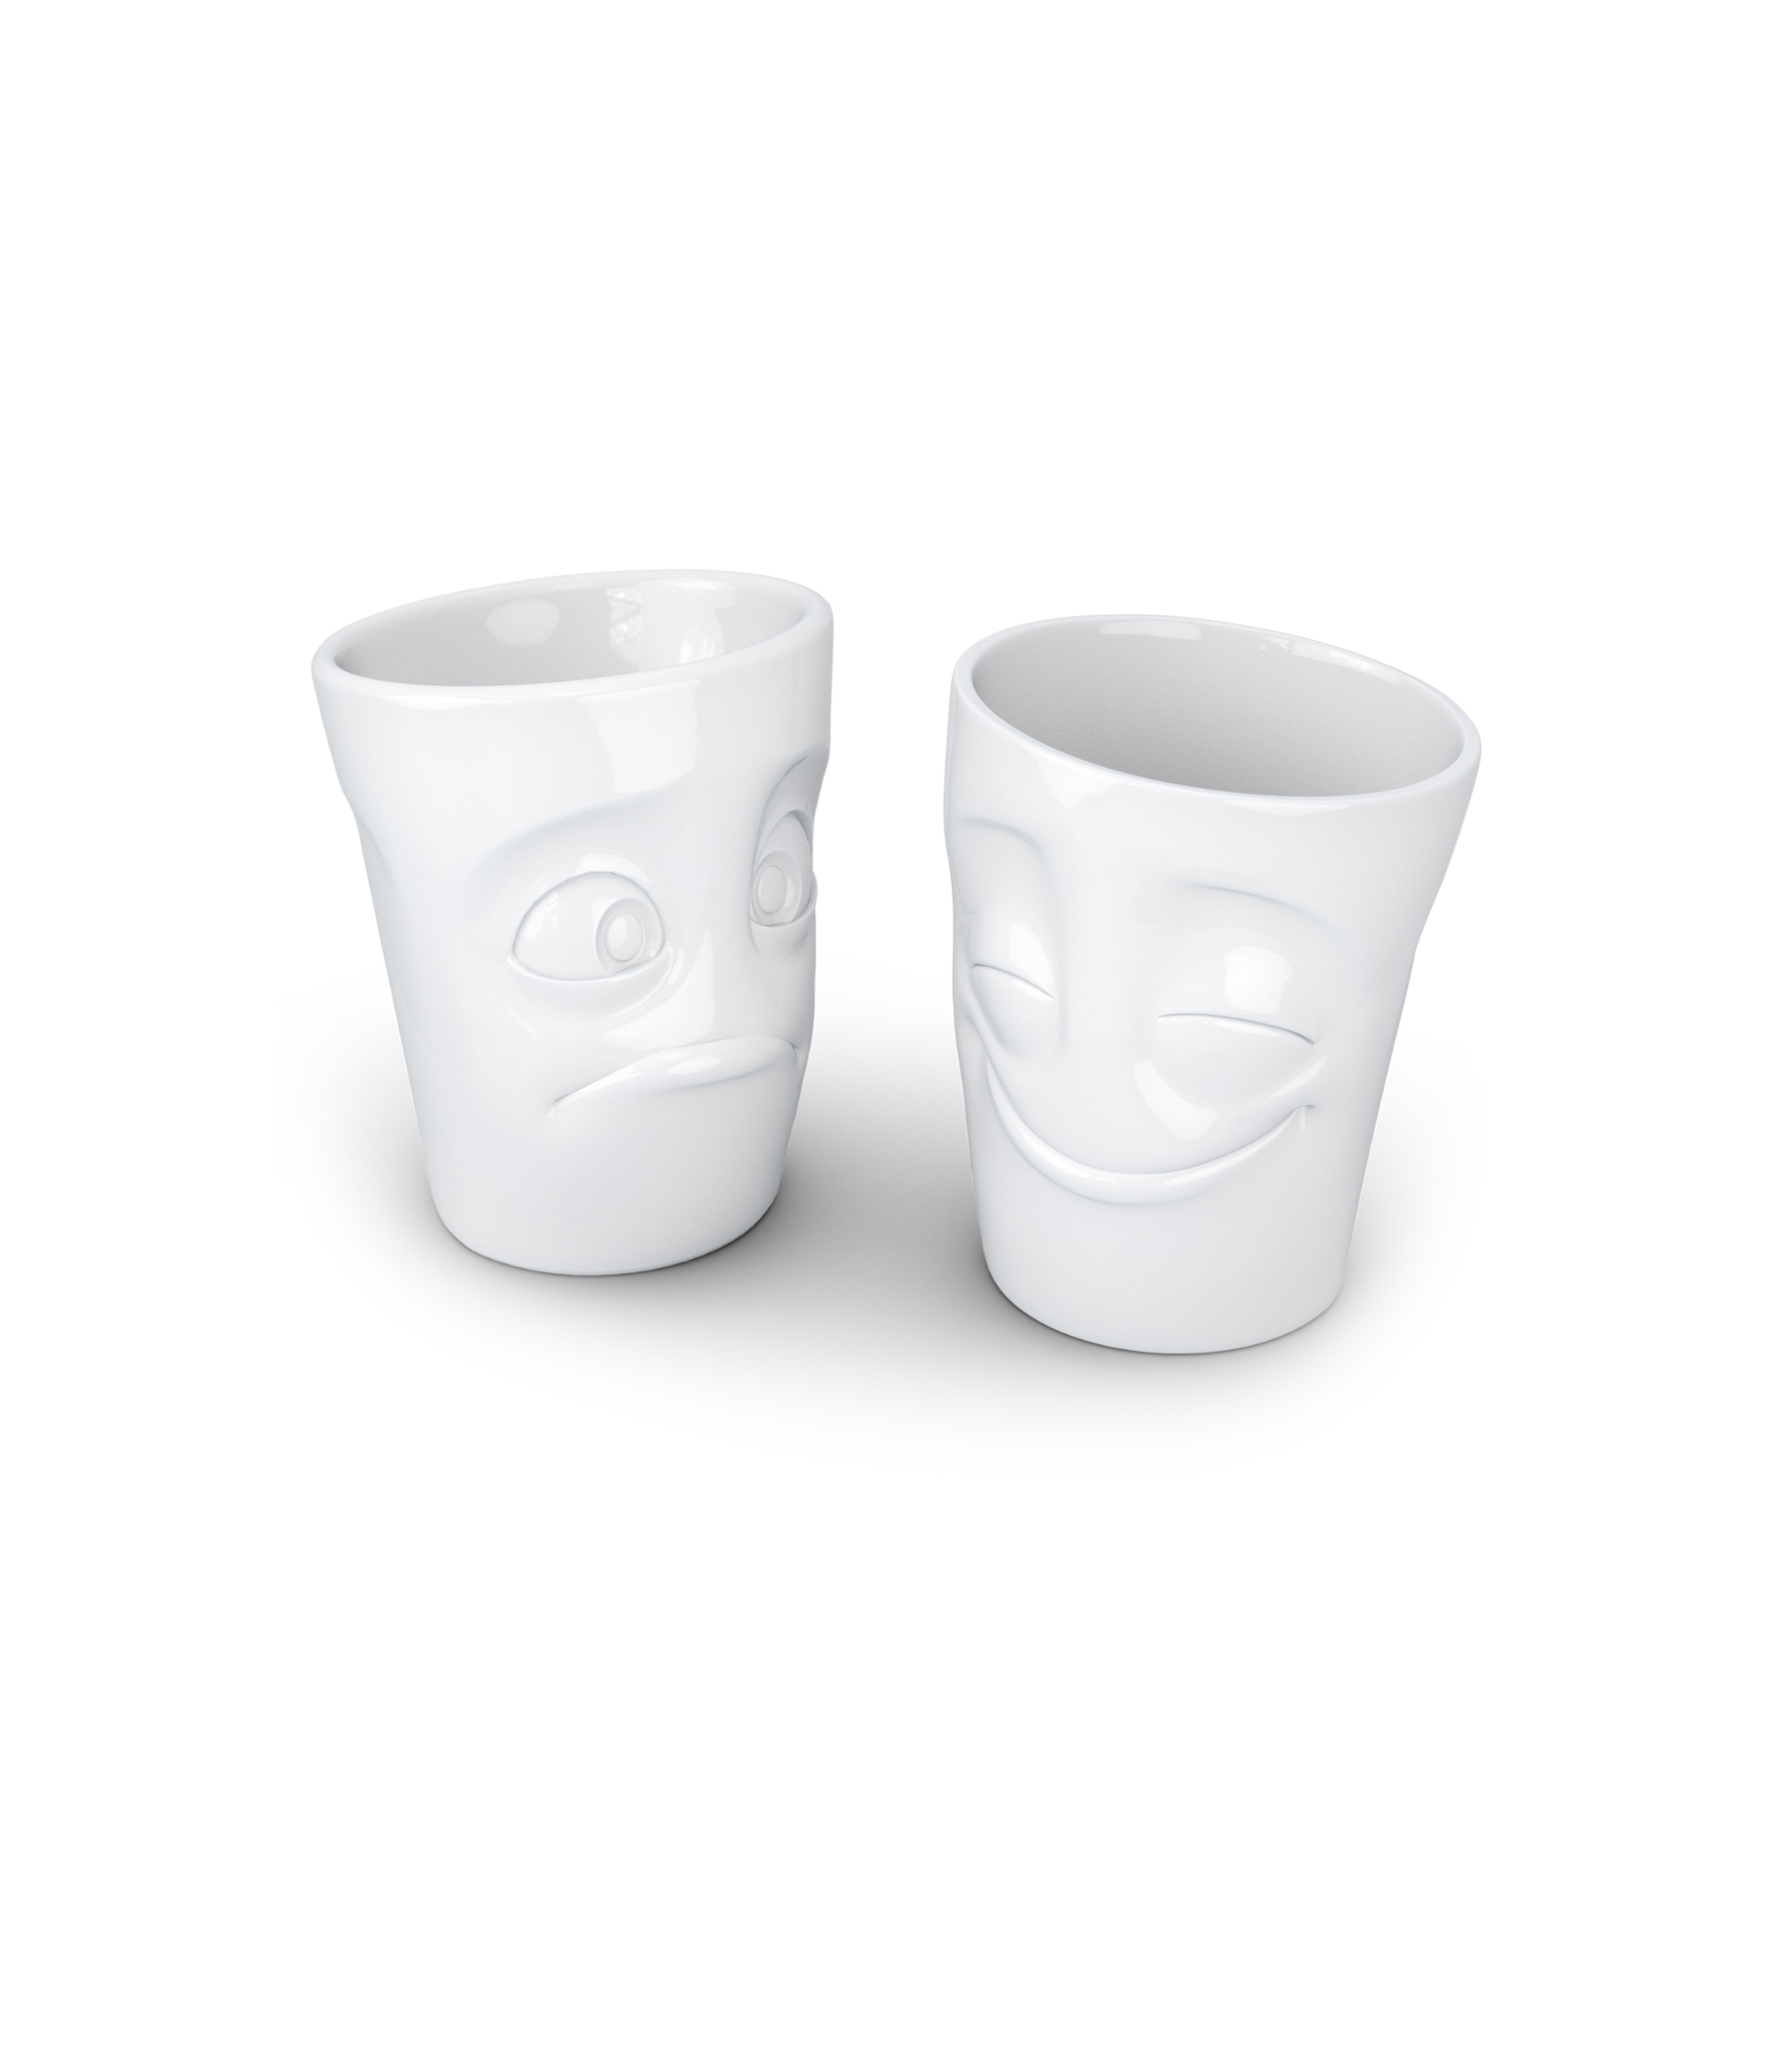 Set 2 mugs Joyeux & Perplexe - Tassen by Fiftyeight Products